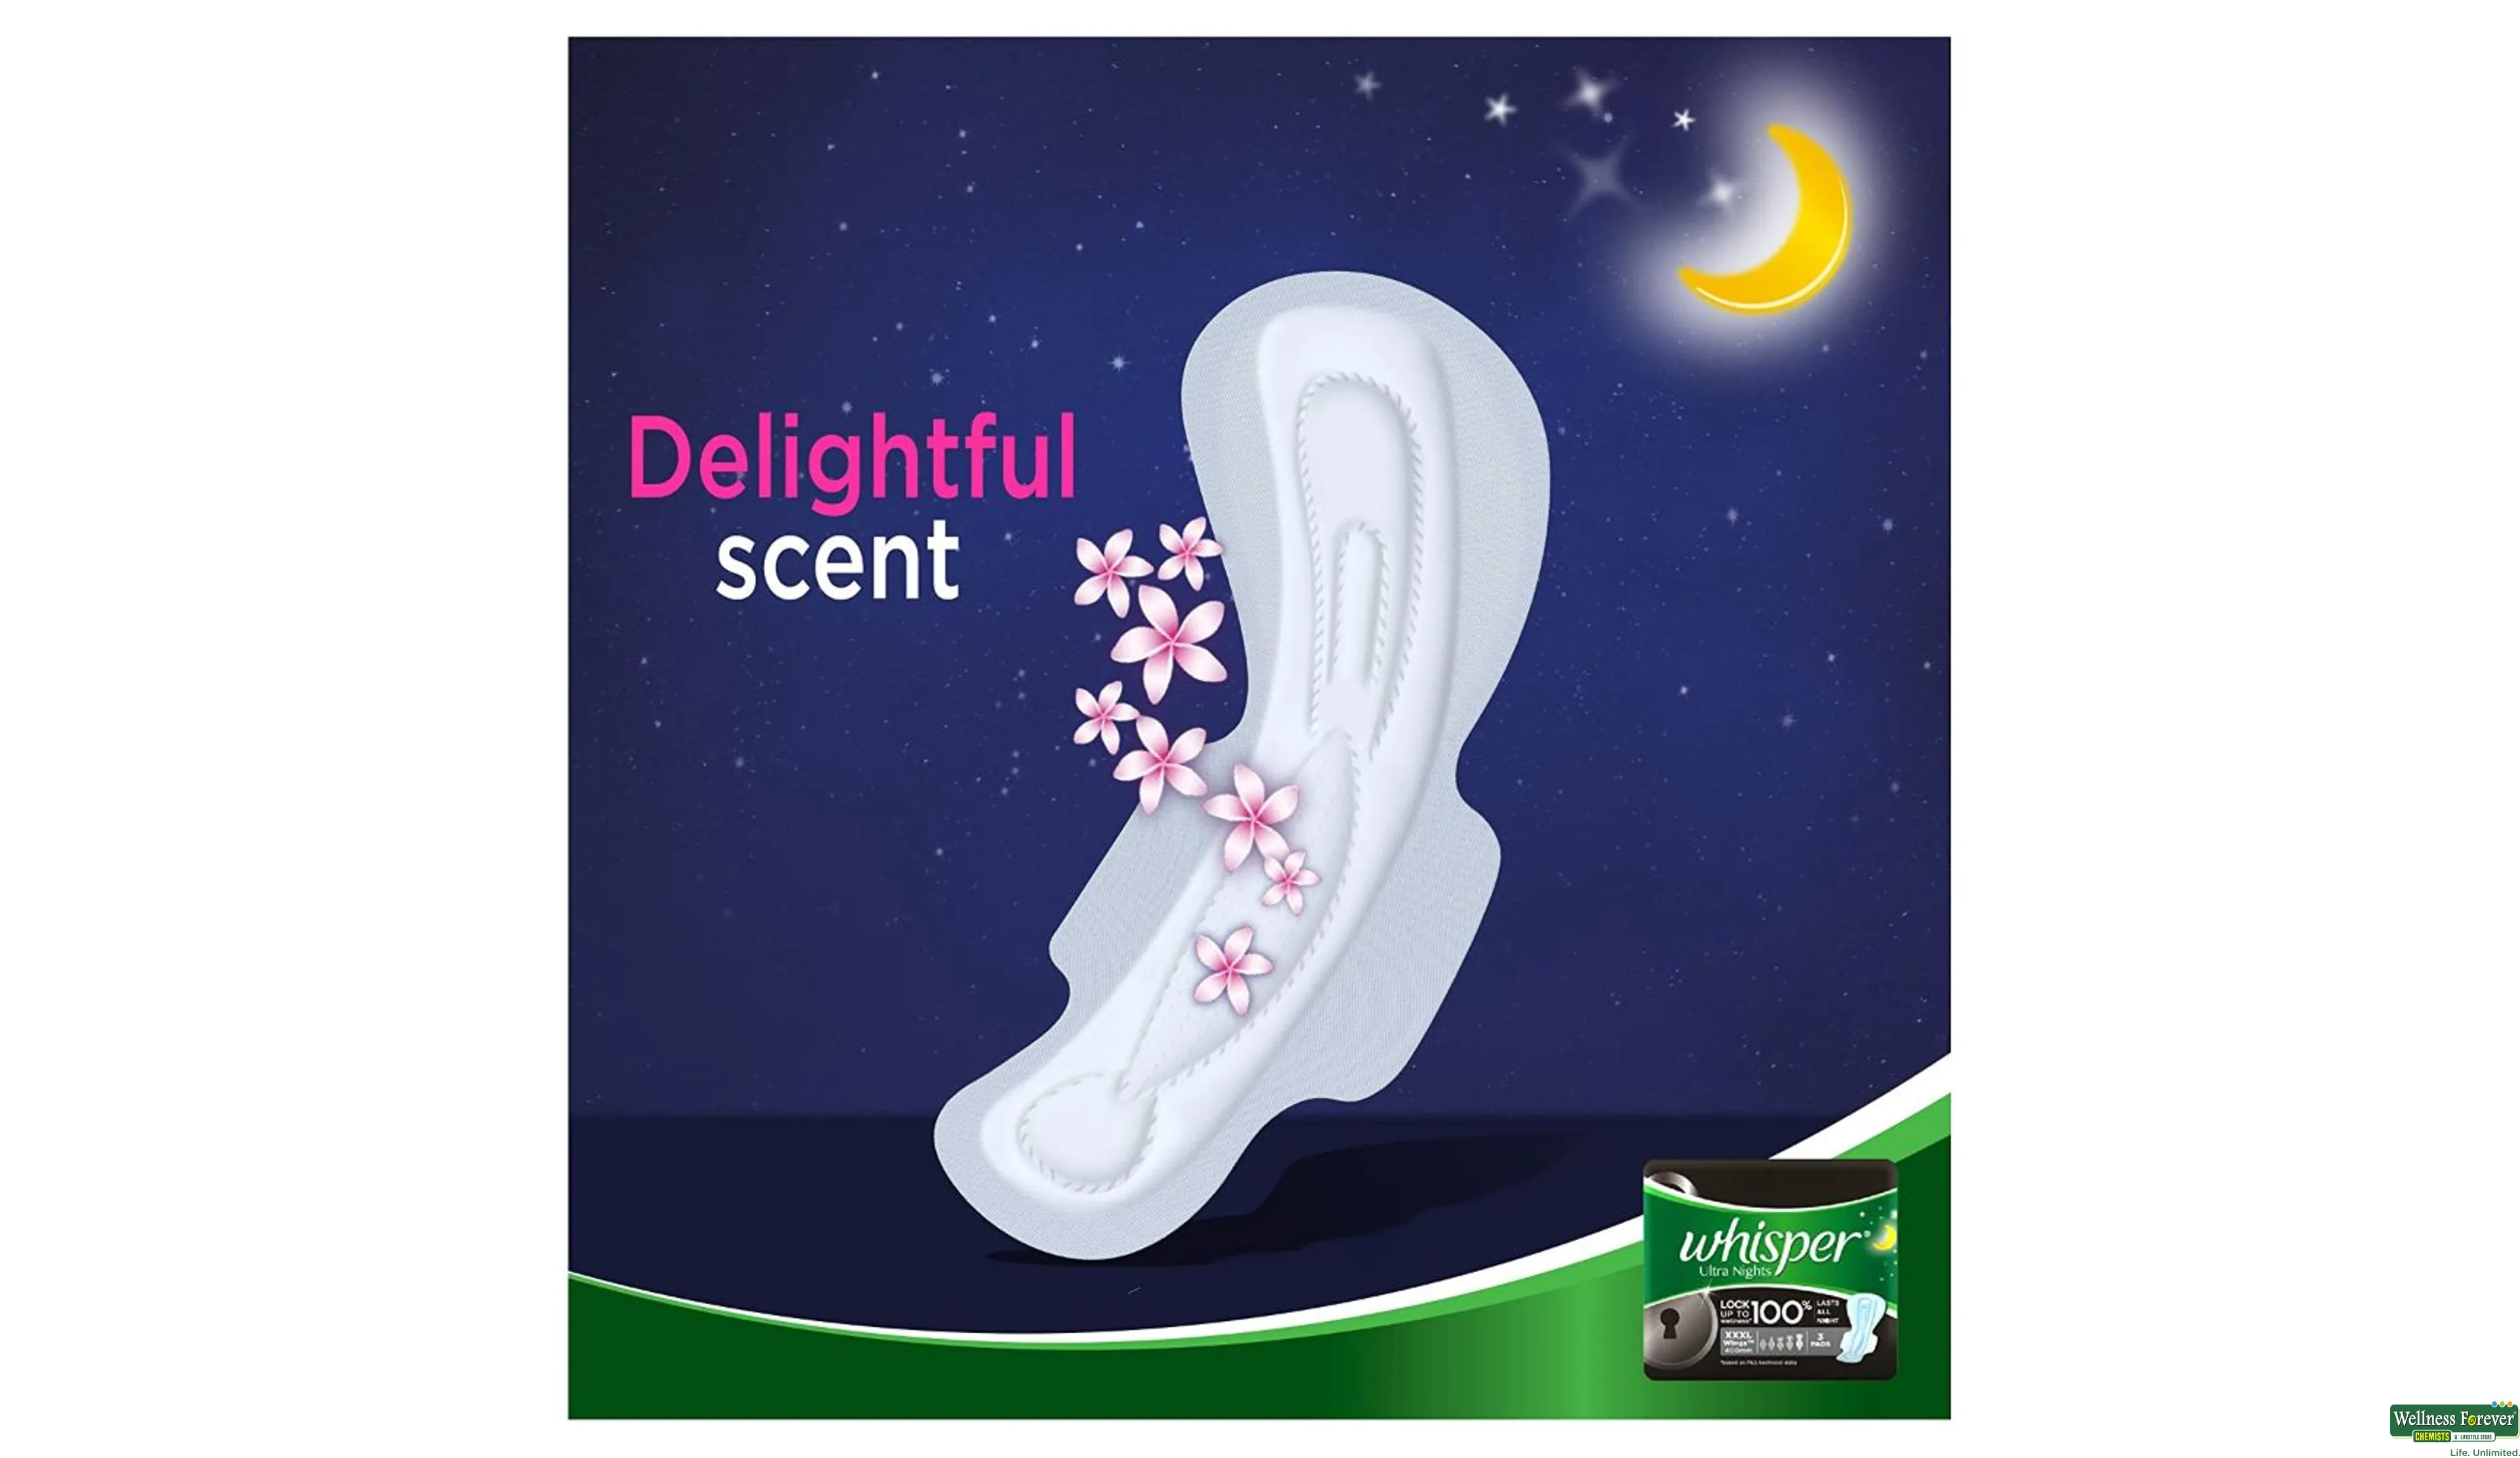 Whisper Ultra Night Sanitary Pads for Women, XXXL 20 Napkins